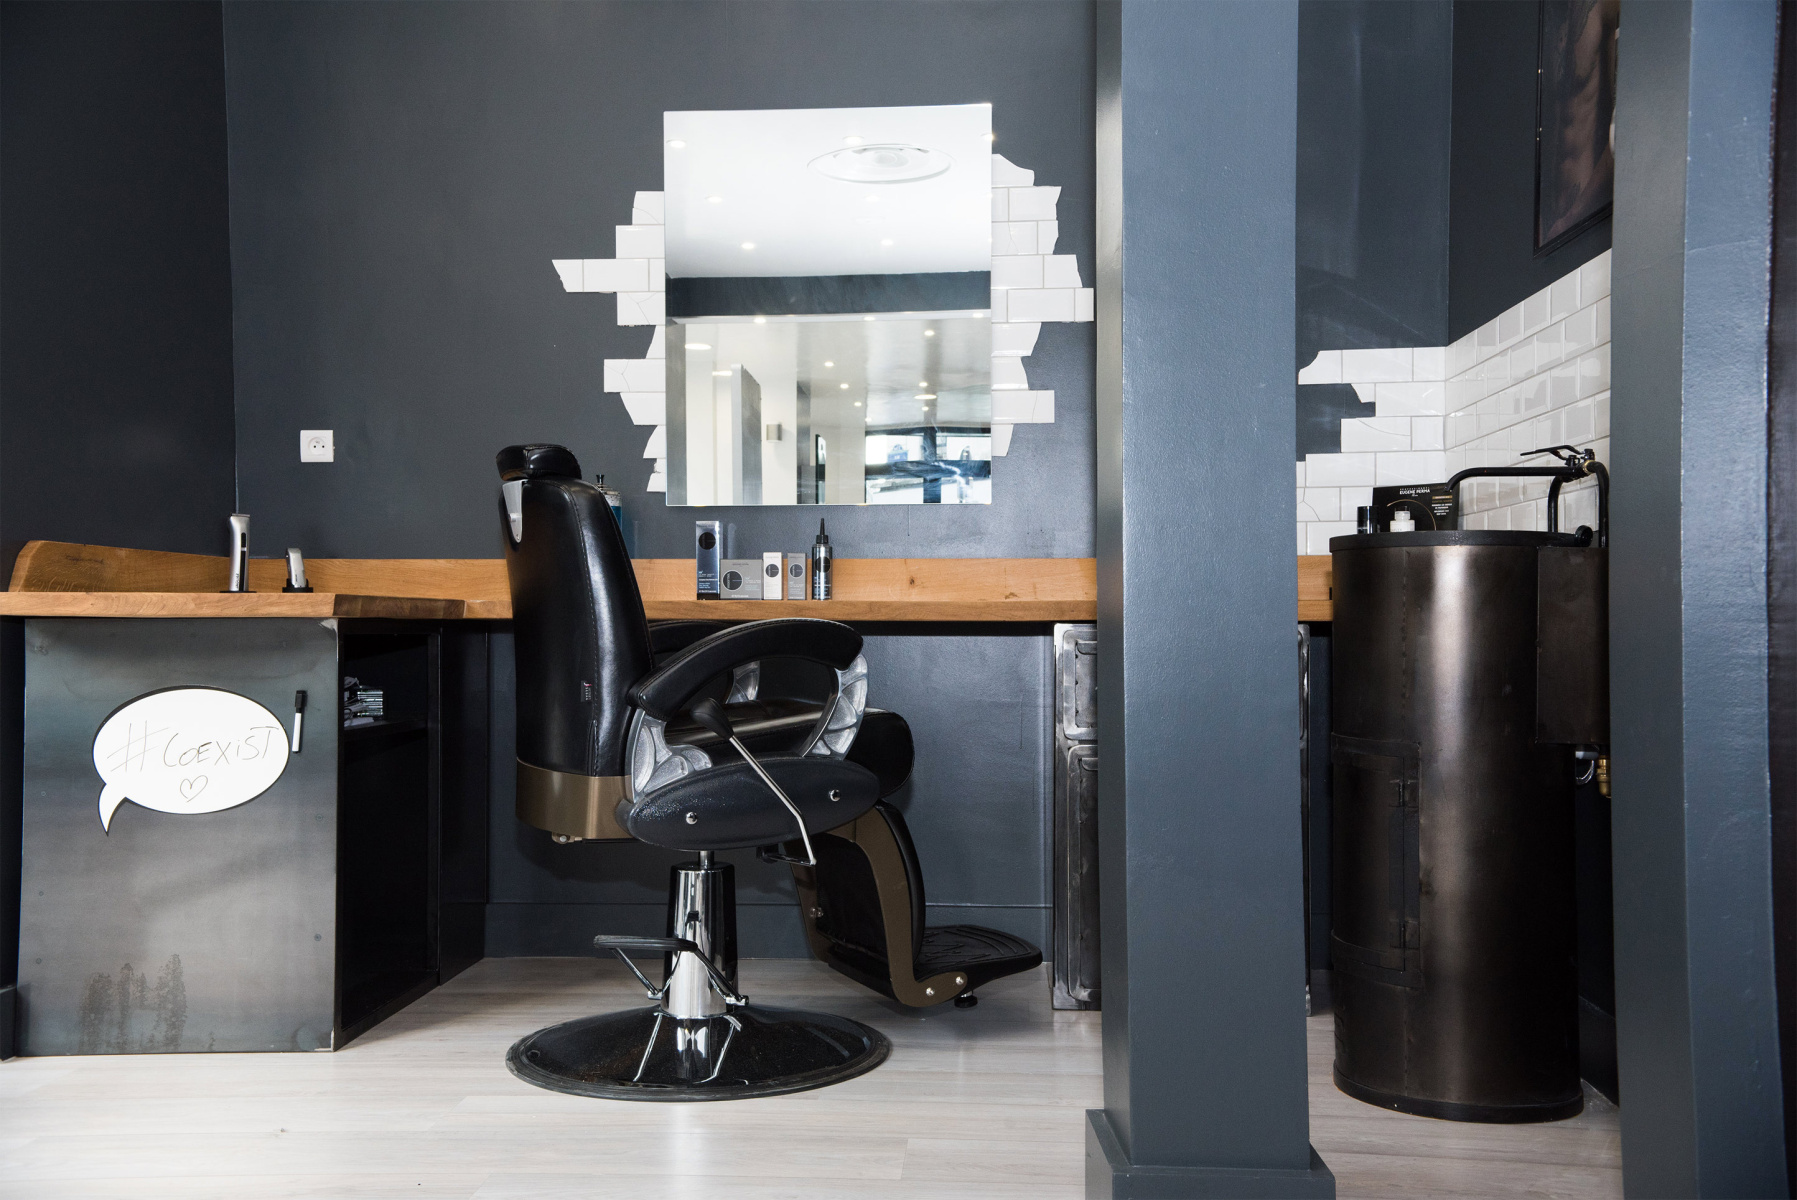 Ludovic Geheniaux Opens A Colorist Hair Salon In Paris Sortiraparis Com